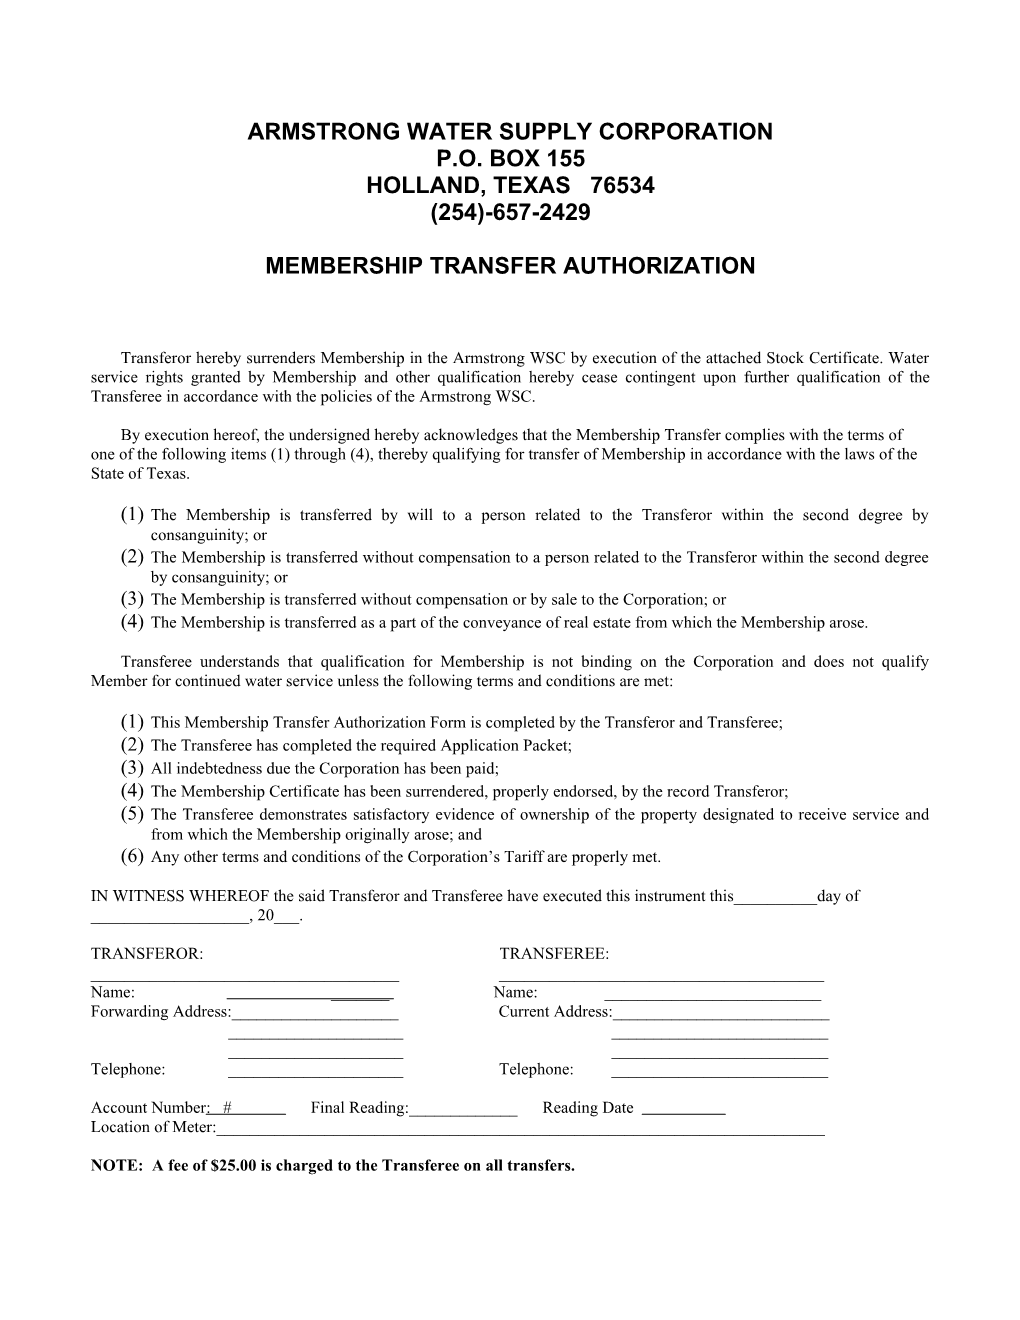 Membership Transfer Authorization